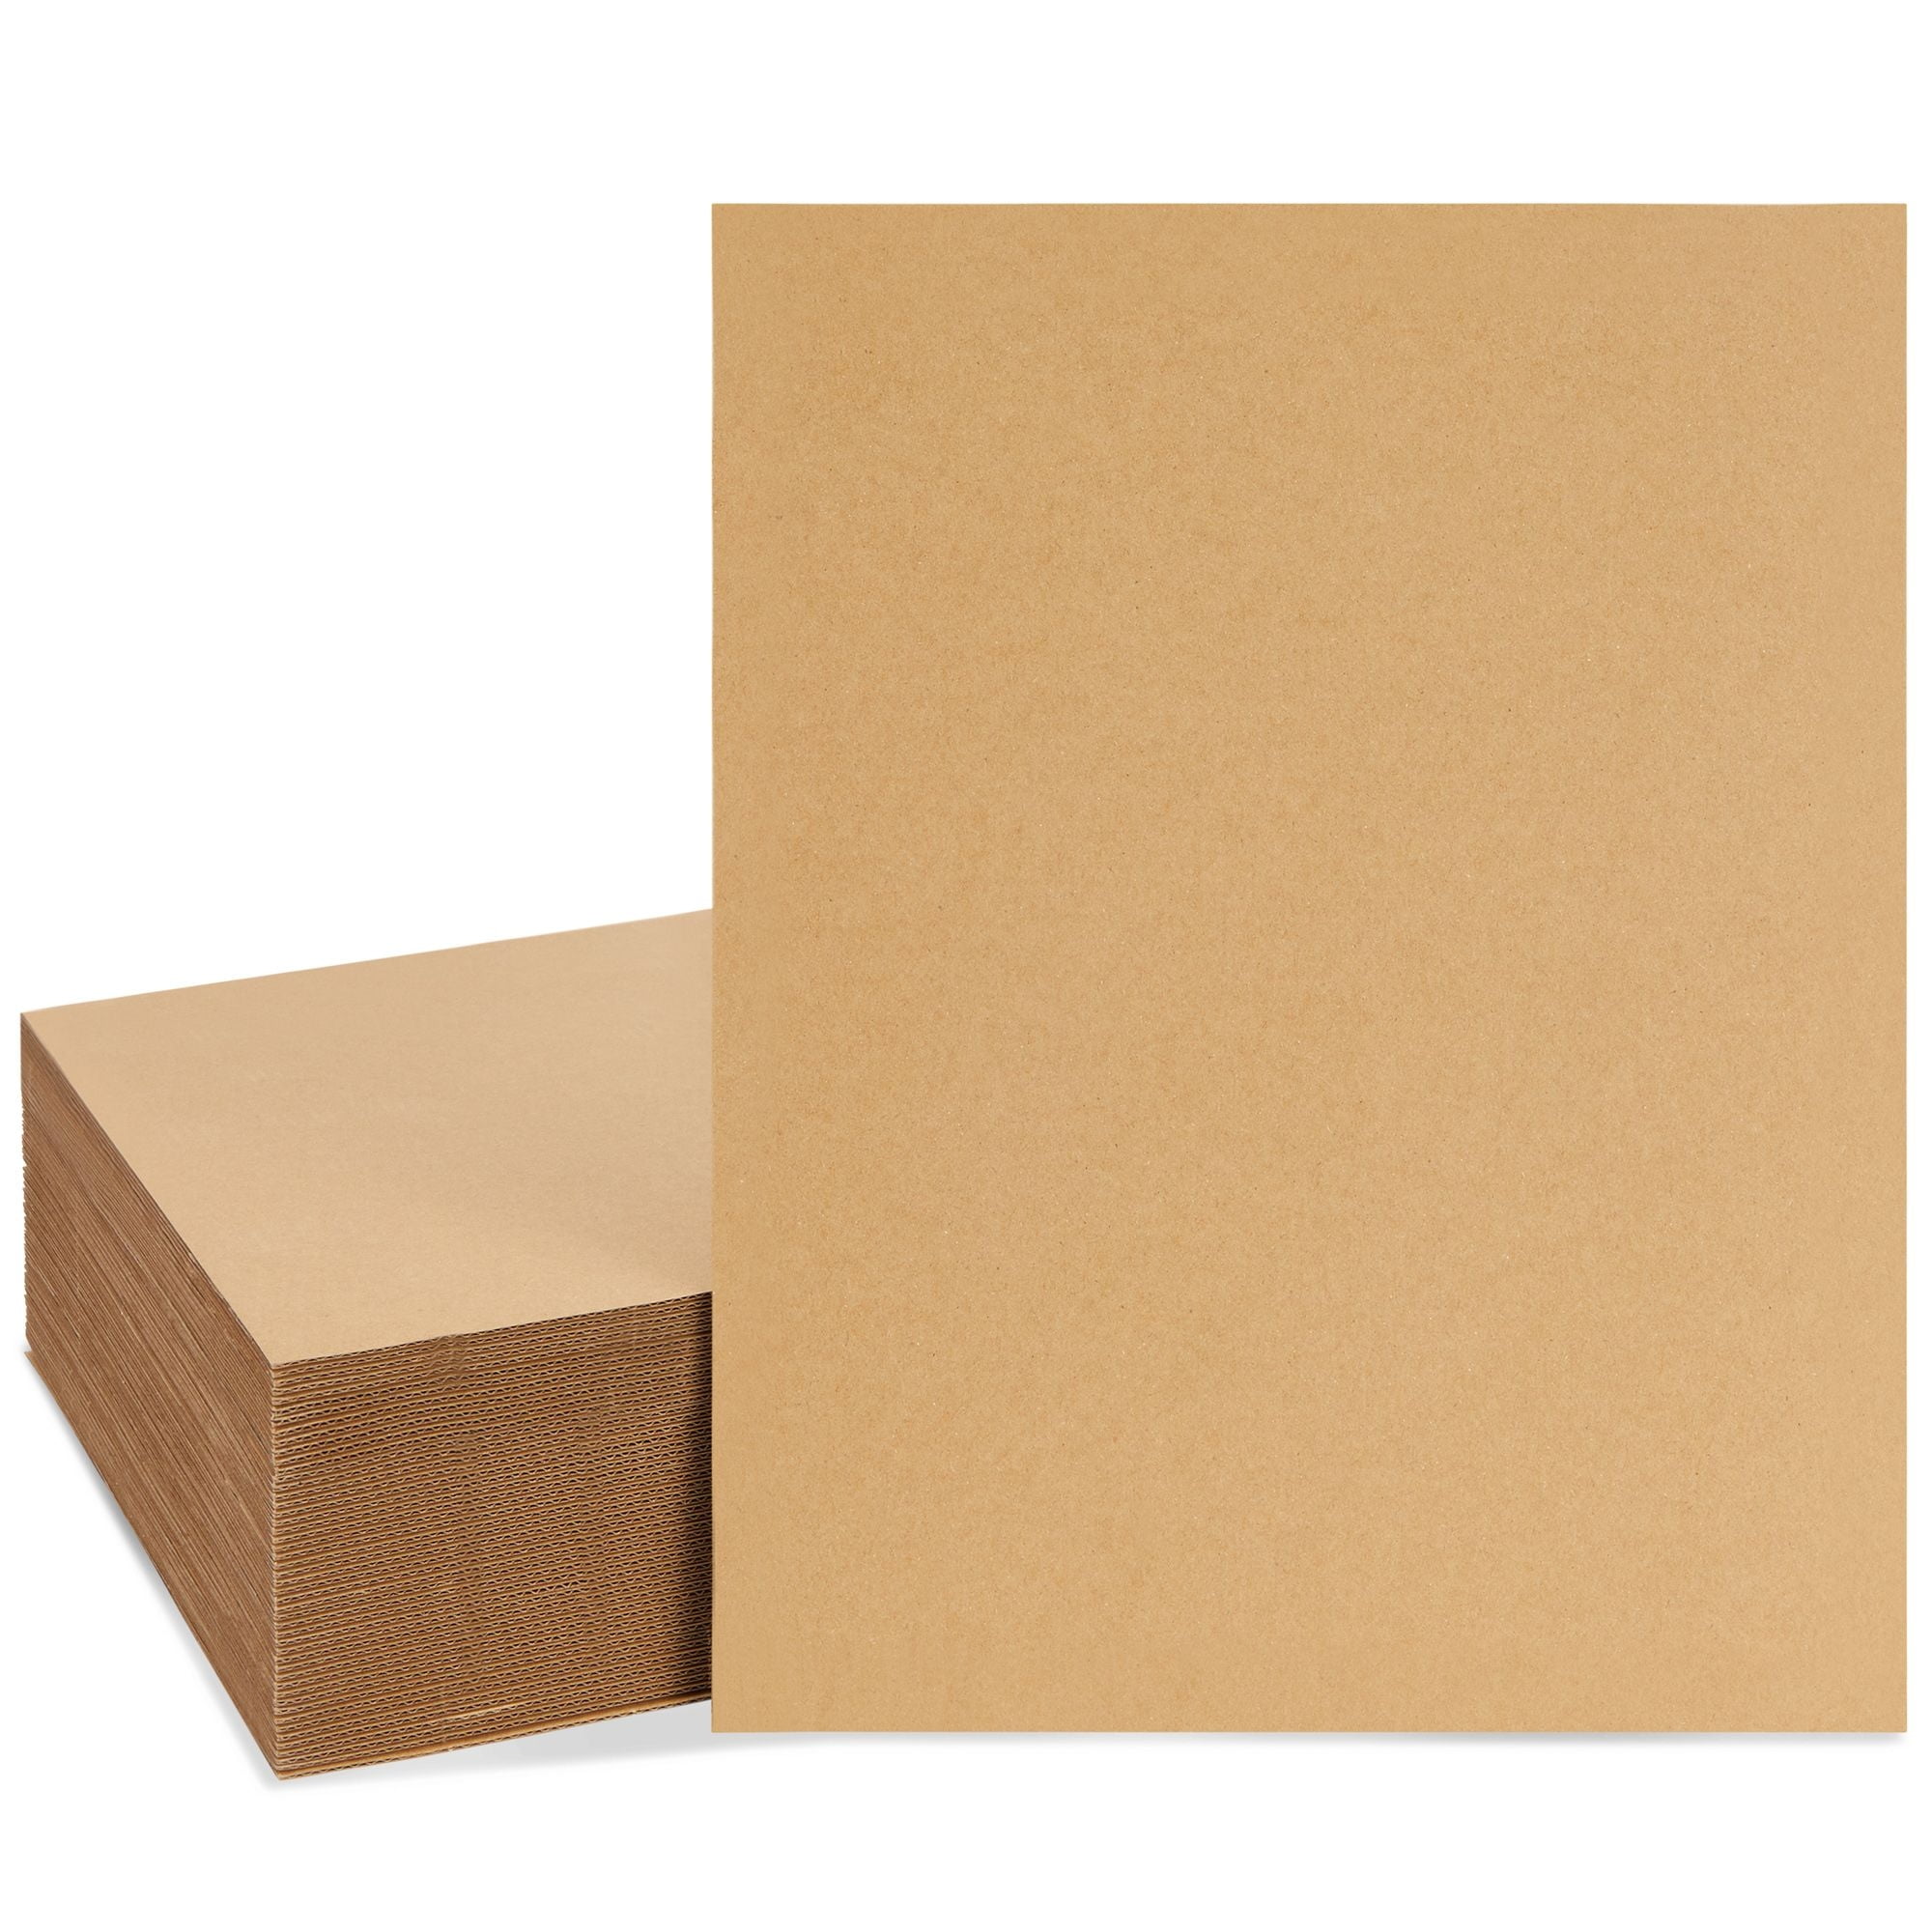 Packing paper, corrugated cardboard rolls, padding